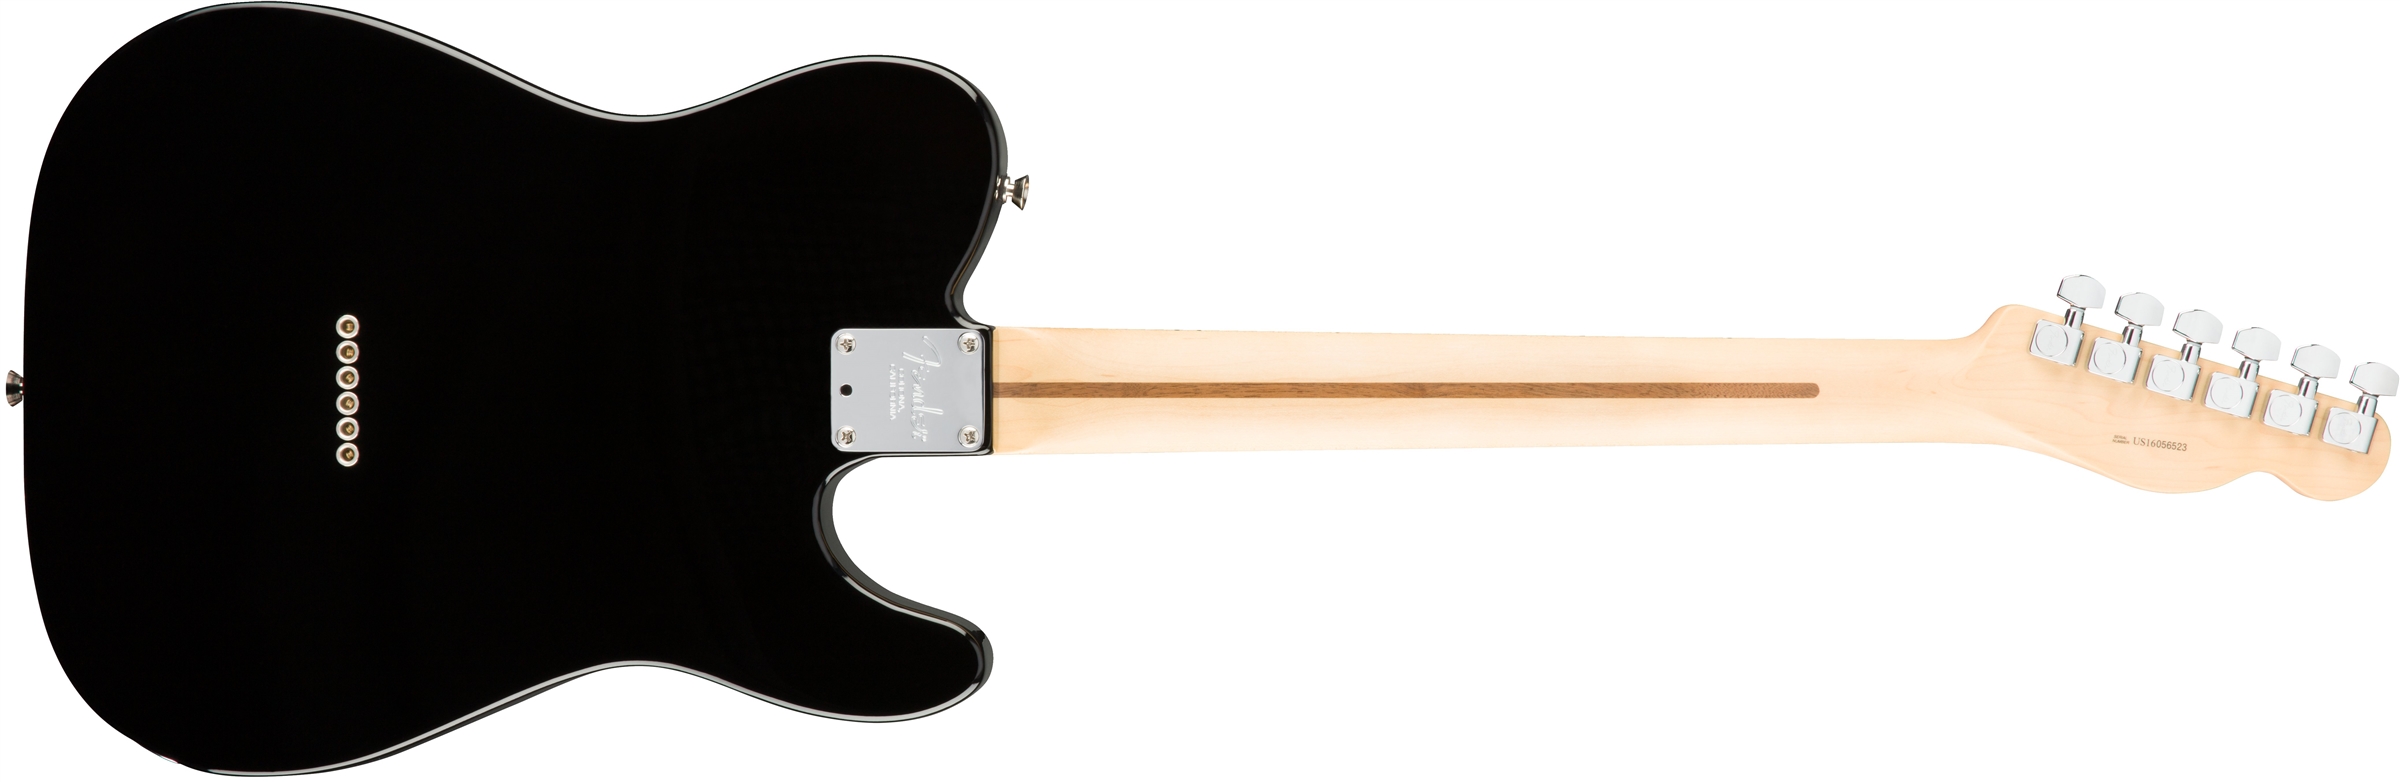 Fender Tele American Professional Lh Usa Gaucher 2s Mn - Black - Left-handed electric guitar - Variation 1